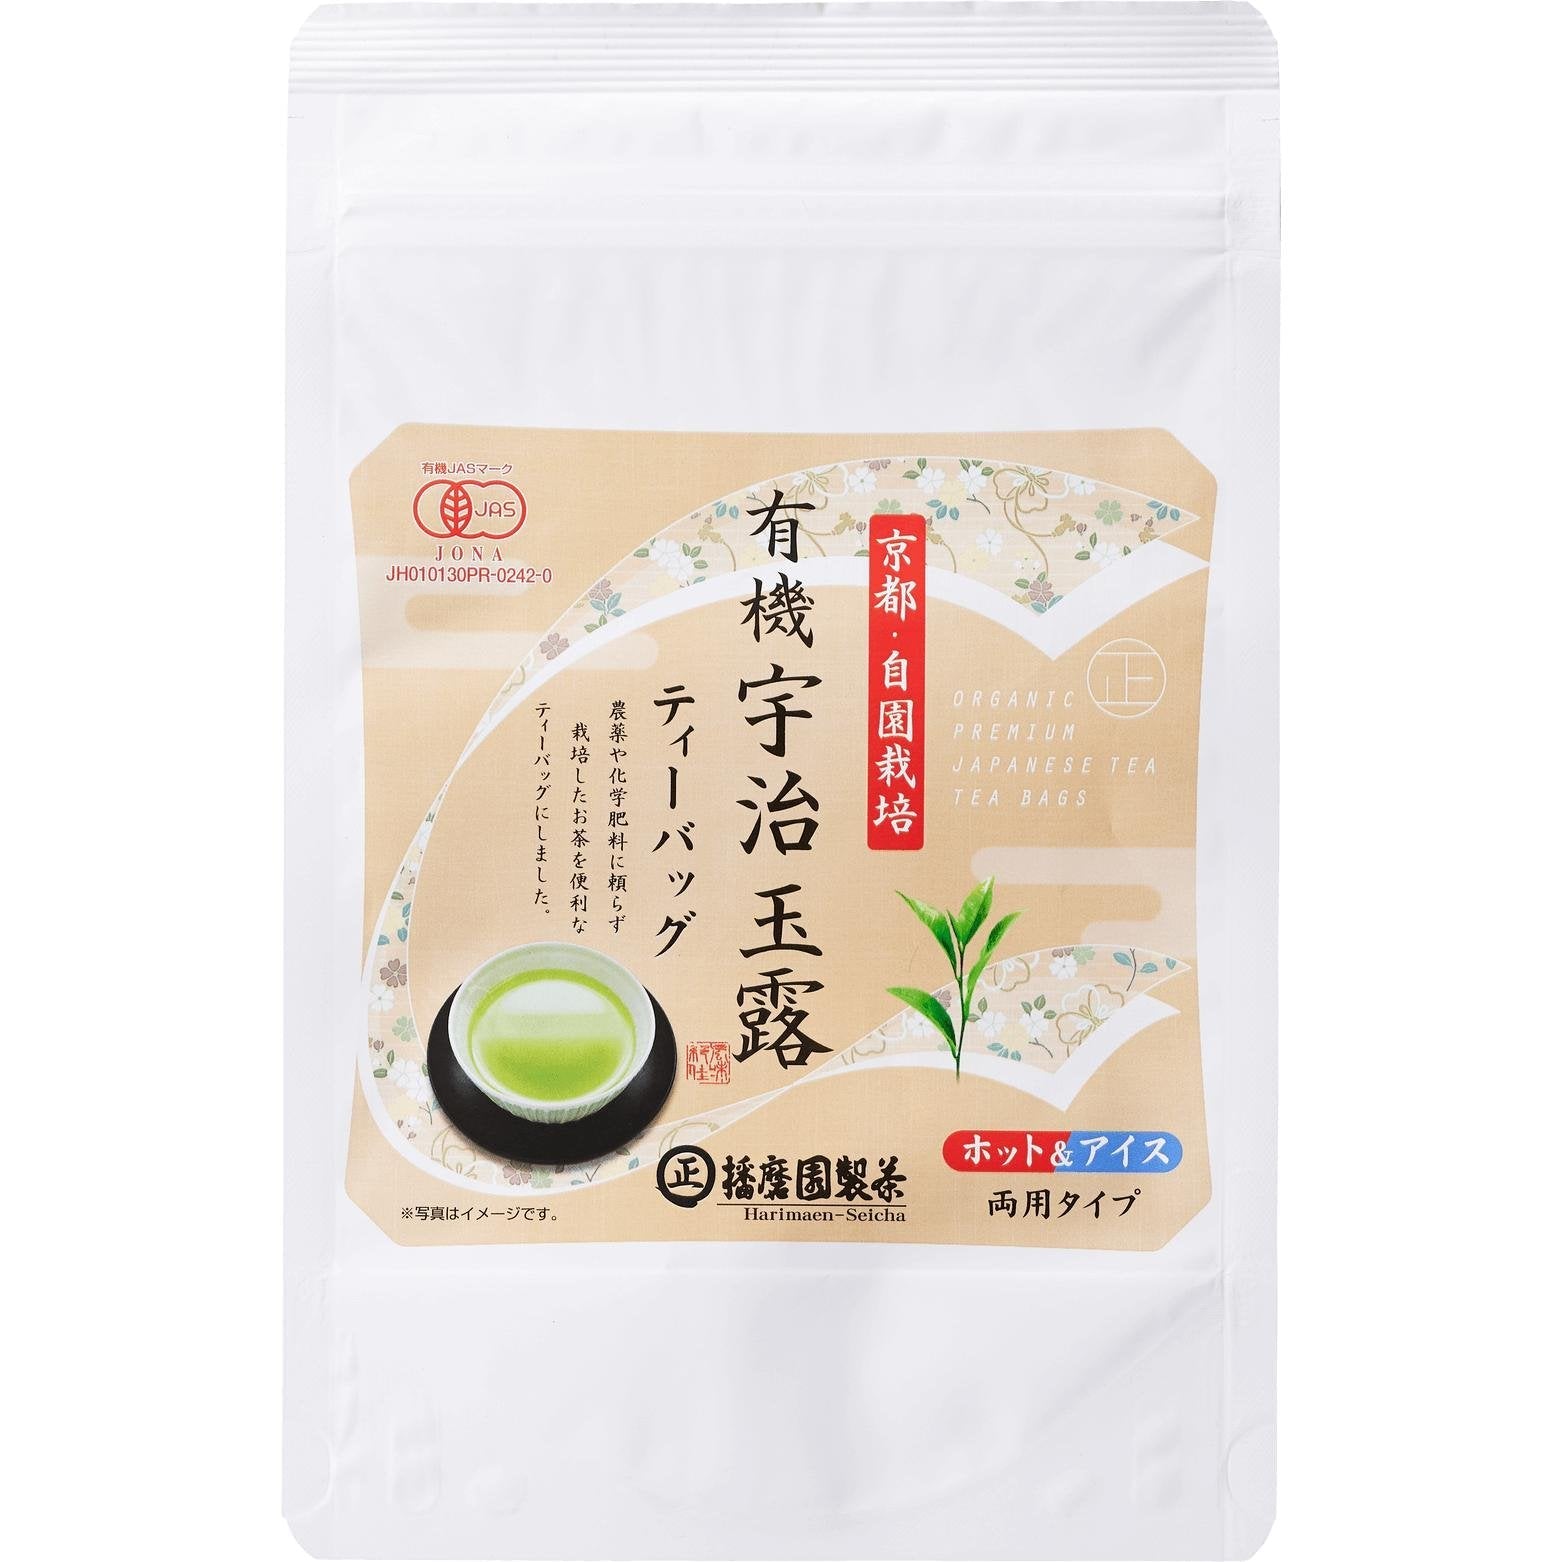 Harimaen Organic Uji Gyokuro Japanese Loose Leaf Green Tea 12 Tea Bags